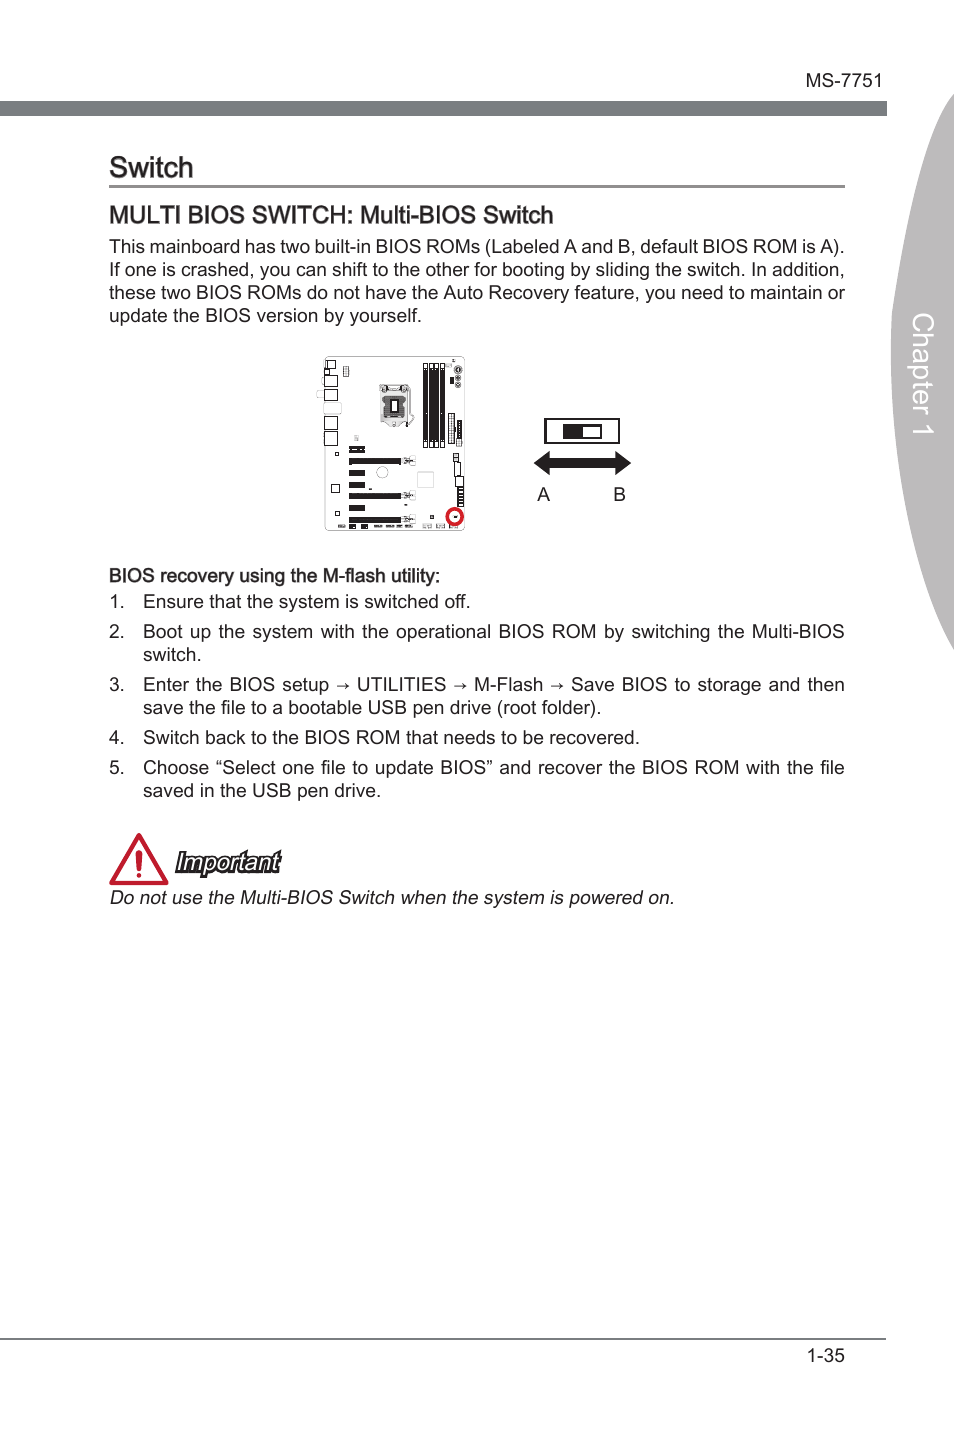 Sw tch -35, Multi bios switch, Mult -bios sw tch | MSI Z77 MPOWER User  Manual | Page 47 / 100 | Original mode